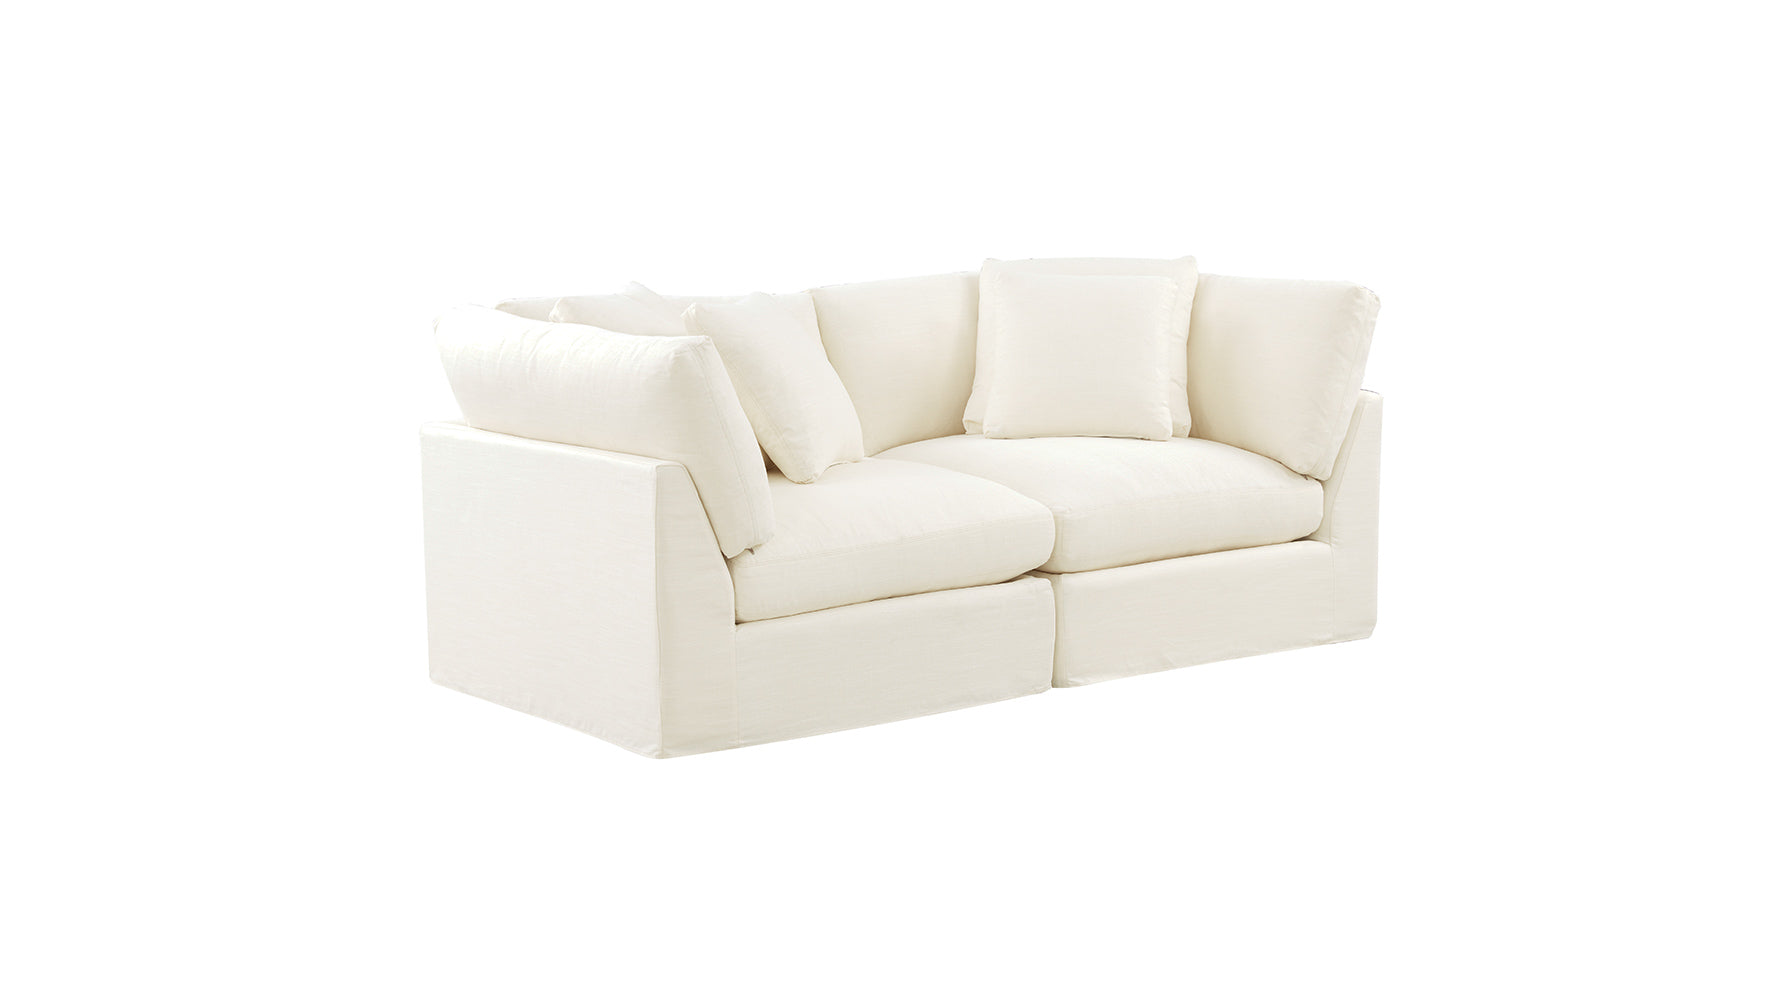 Get Together™ 2-Piece Modular Sofa, Large, Cream Linen - Image 2